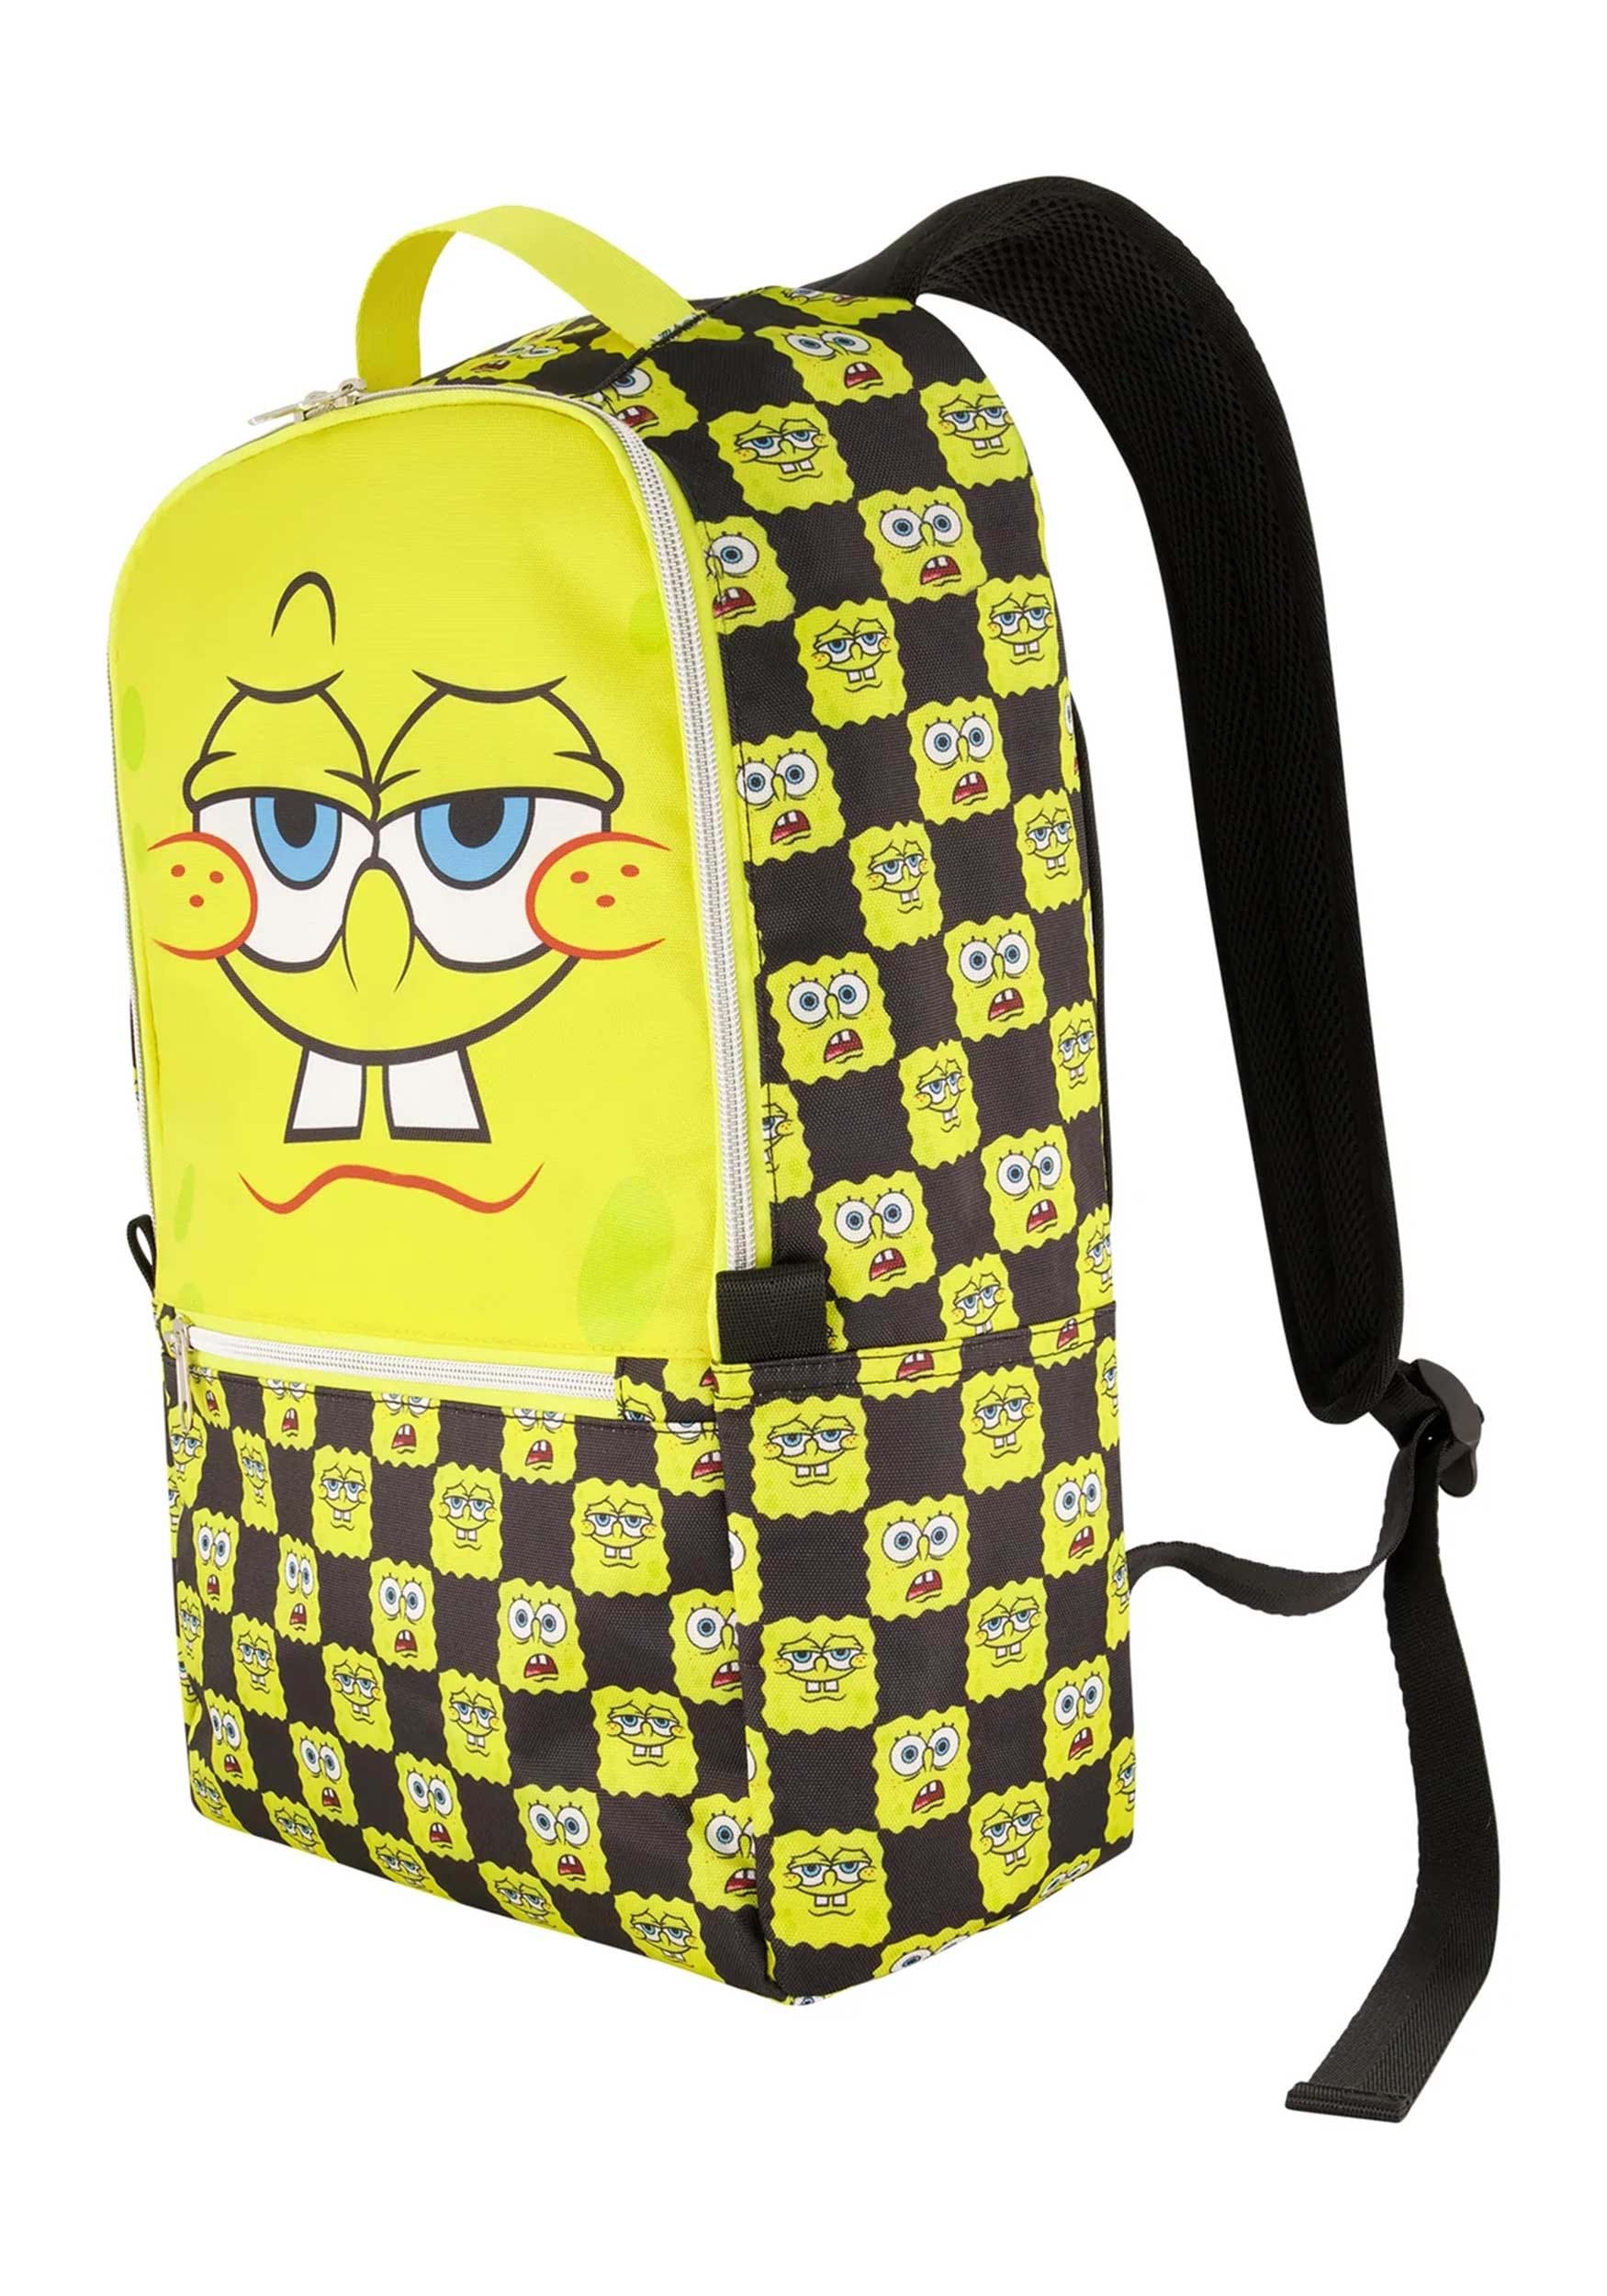 Spongebob Checkered Face Backpack